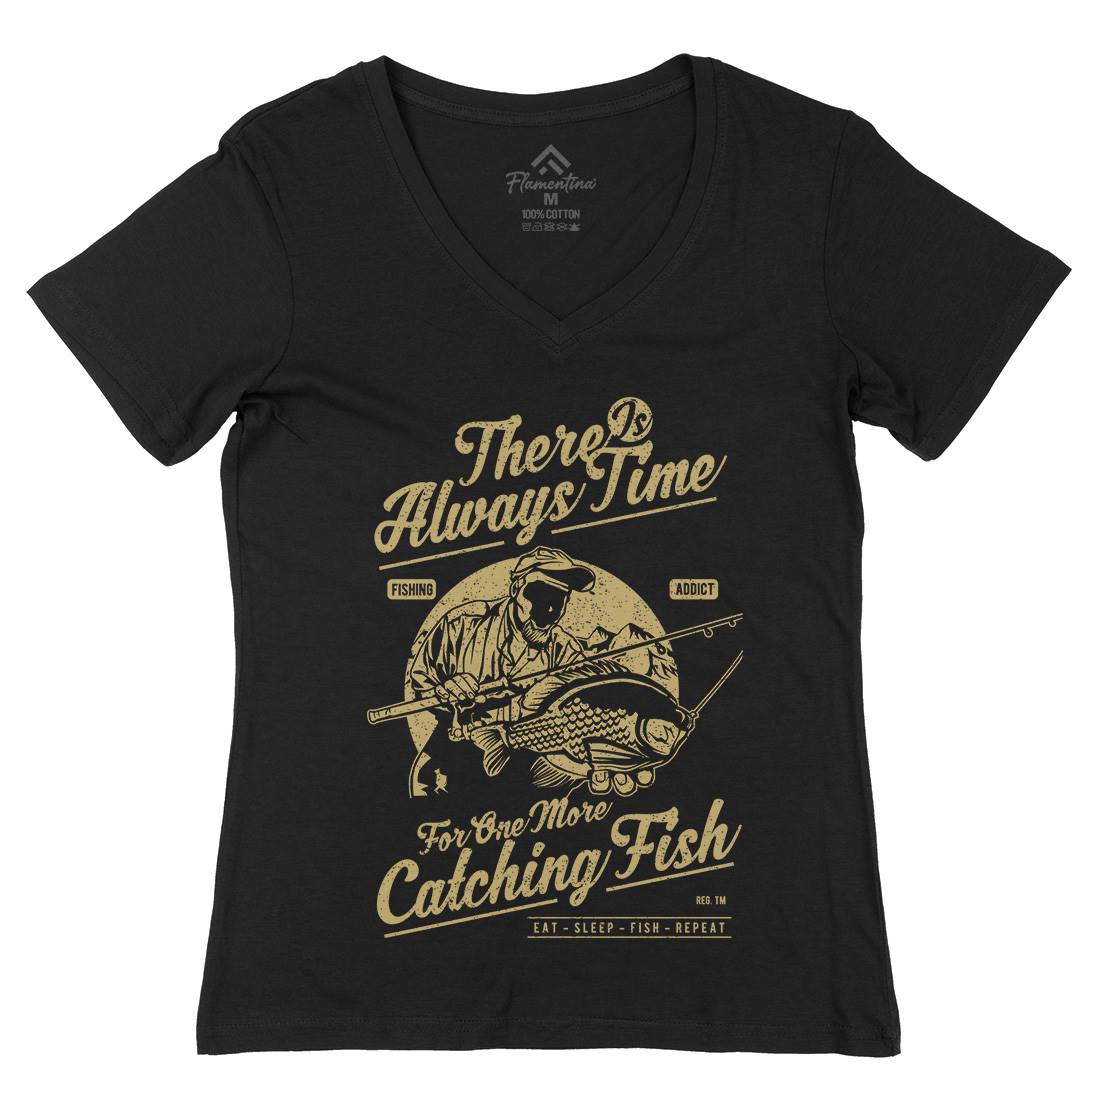 One More Catching Womens Organic V-Neck T-Shirt Fishing A731